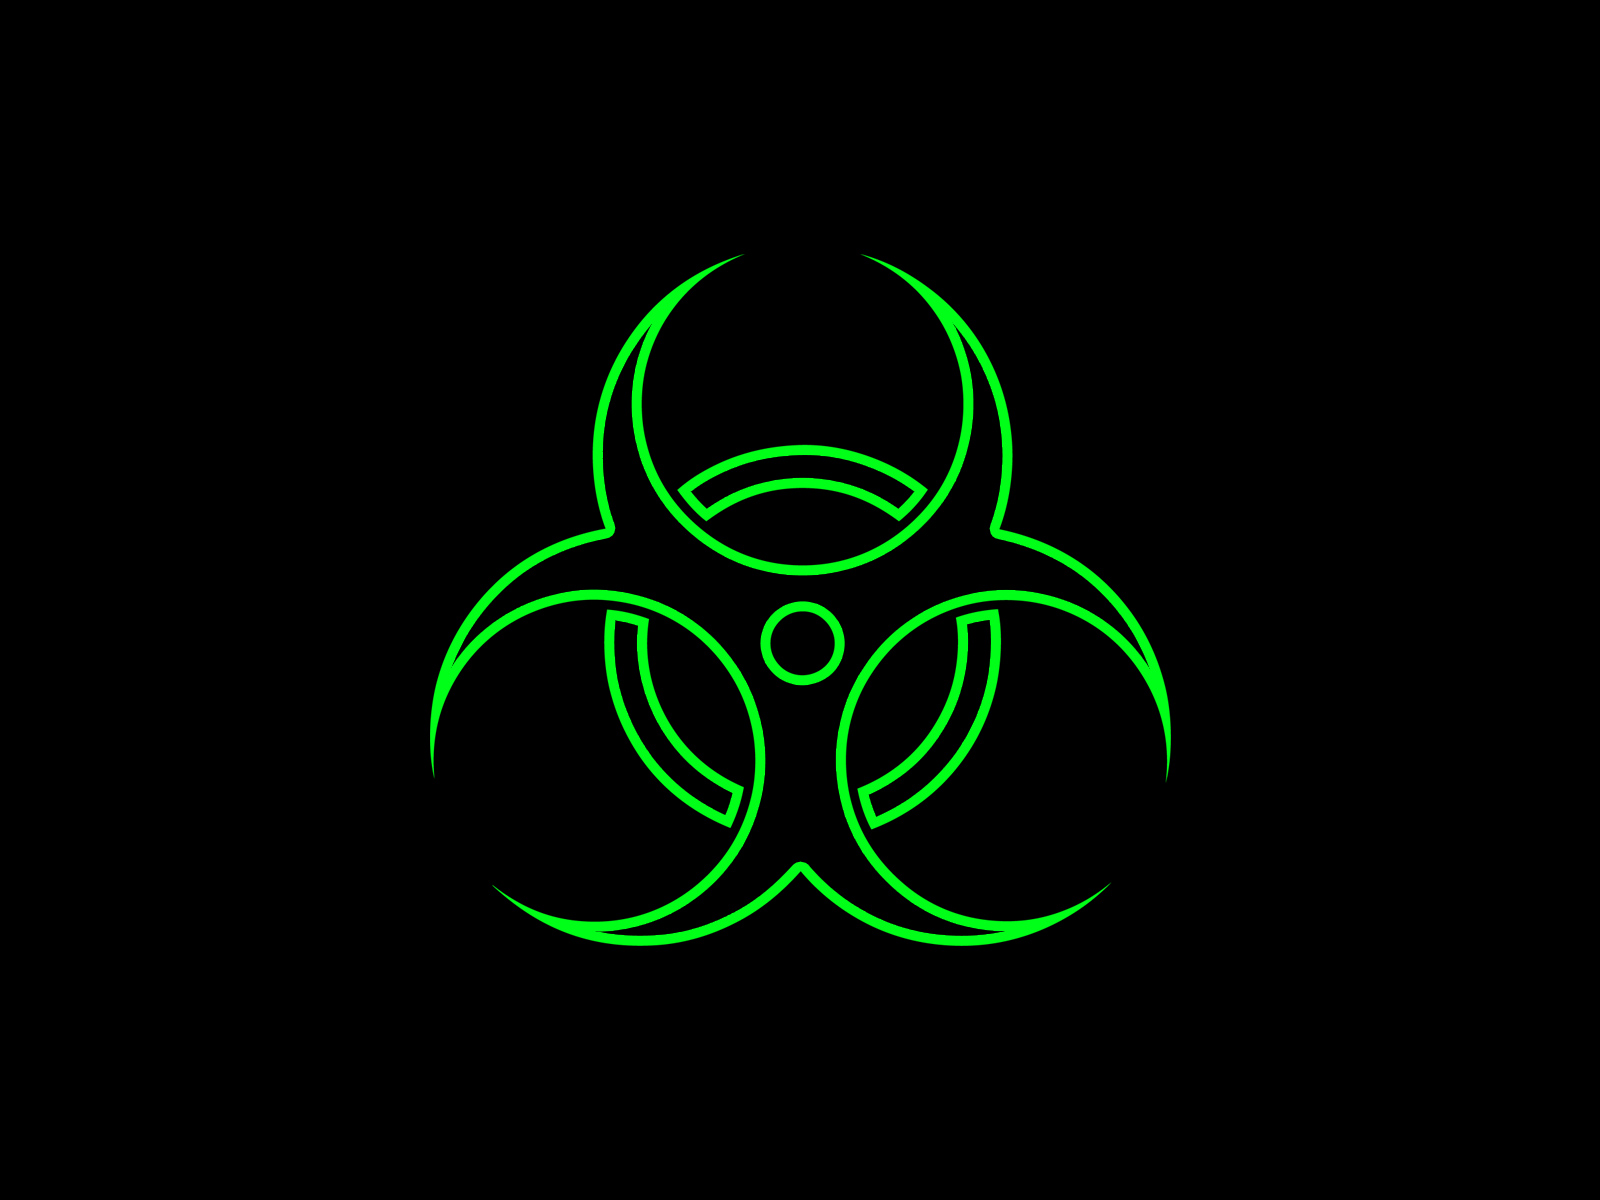 Background Bio Hazard Logo In Green Yellow Black Awsome